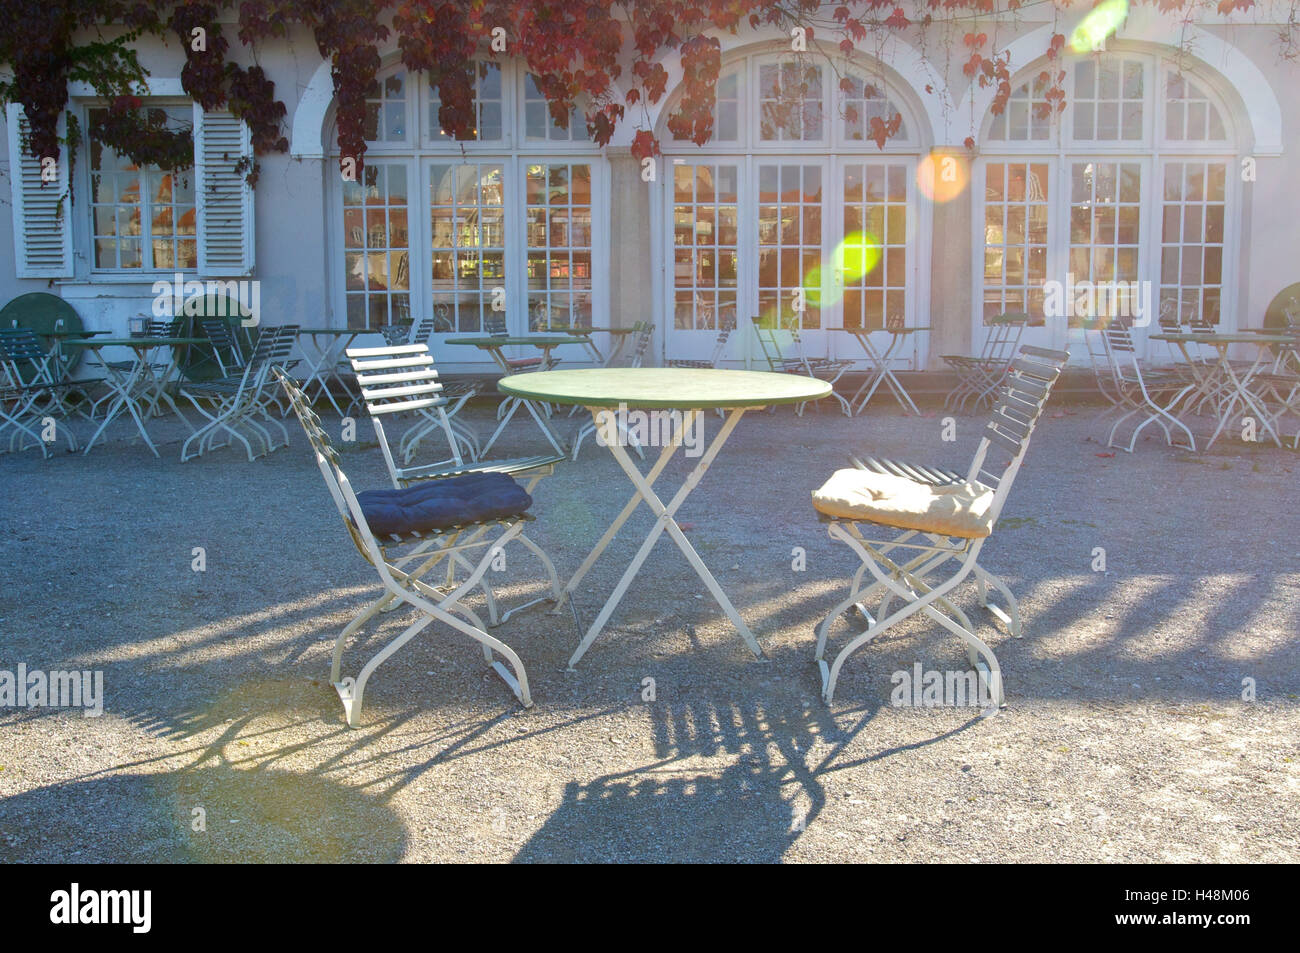 Garden, tables, chairs, sunlight, Stock Photo